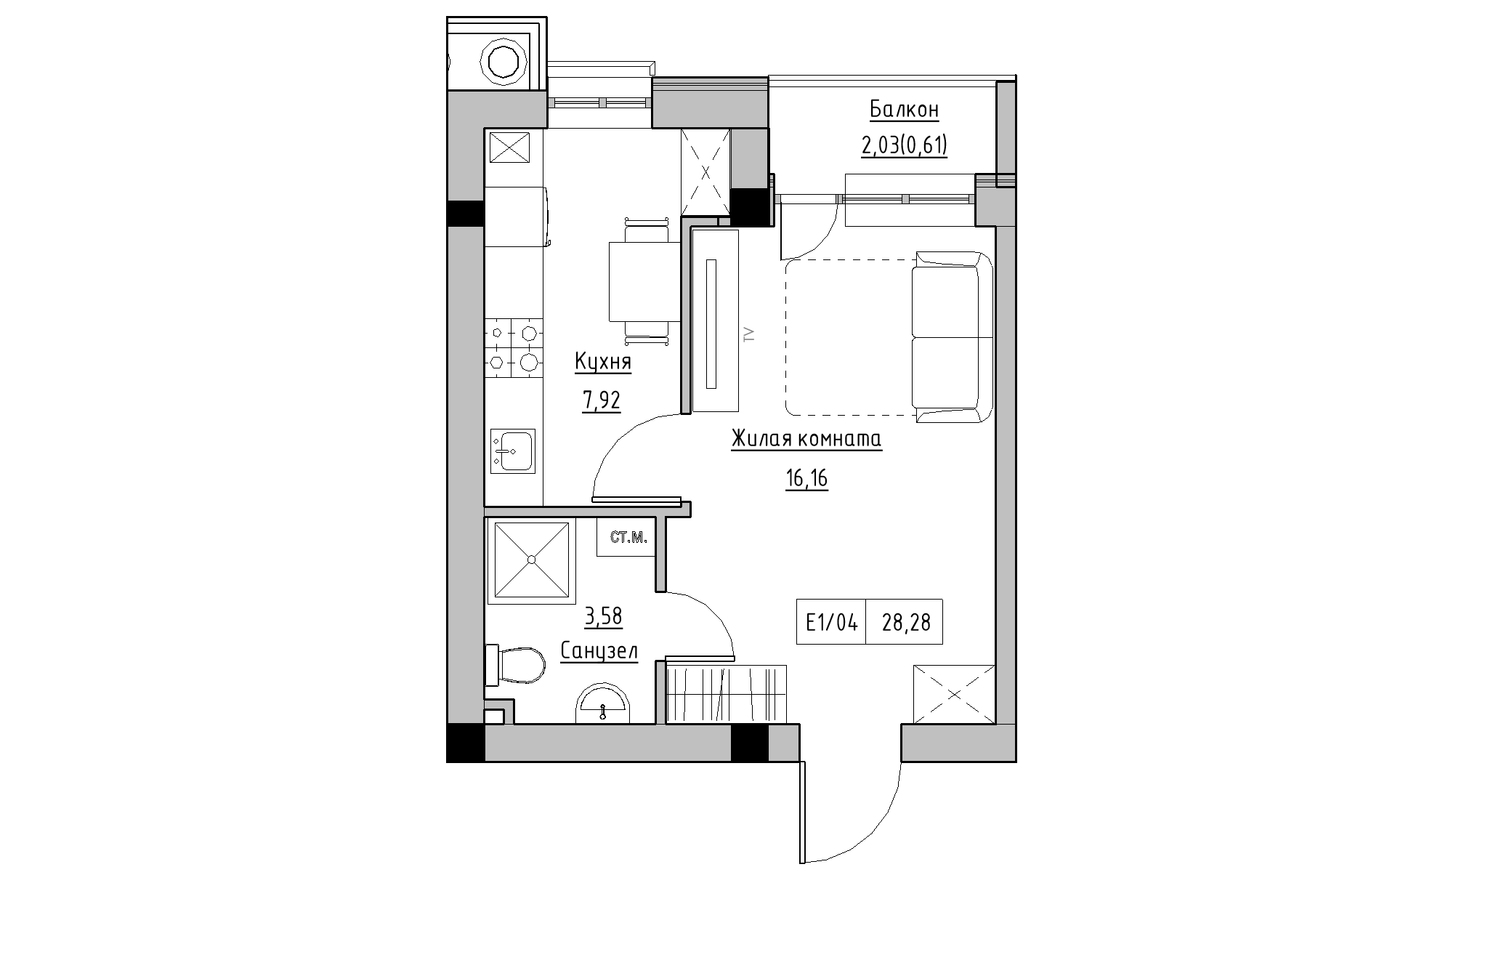 Planning 1-rm flats area 27.55m2, KS-010-05/0007.